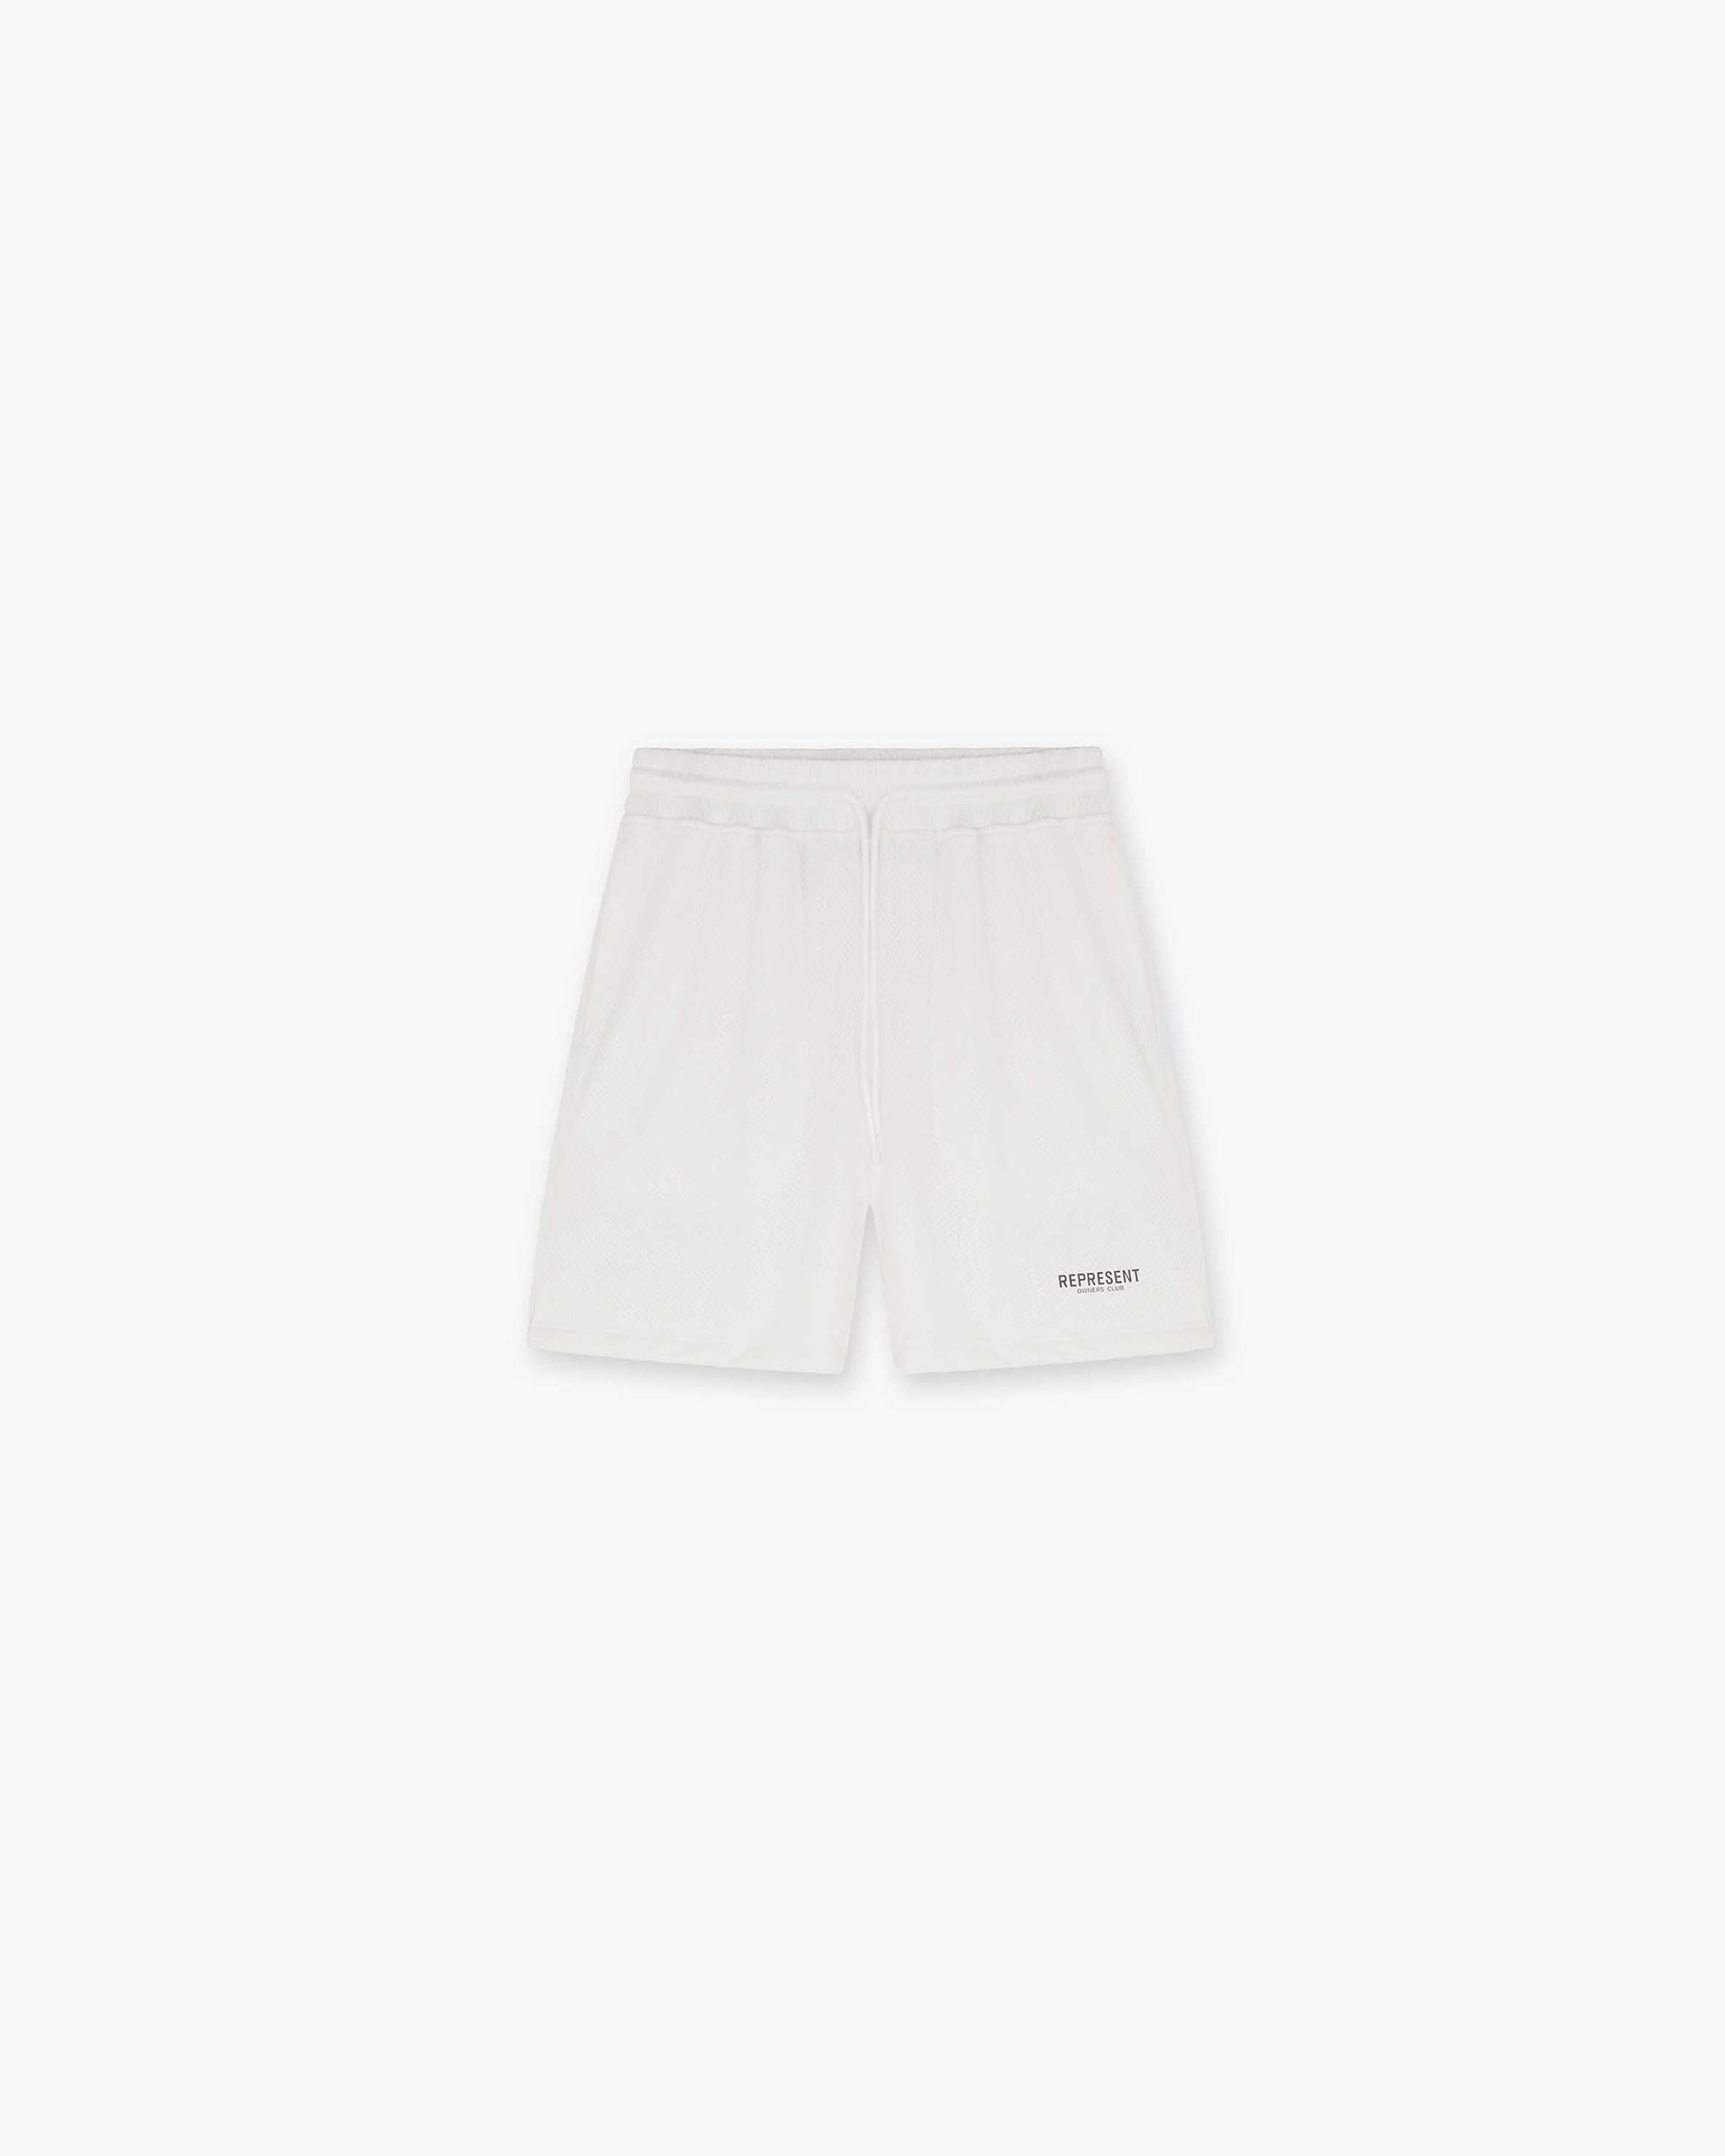 Represent Owners Club Mesh Shorts | Flat White Shorts Owners Club | Represent Clo